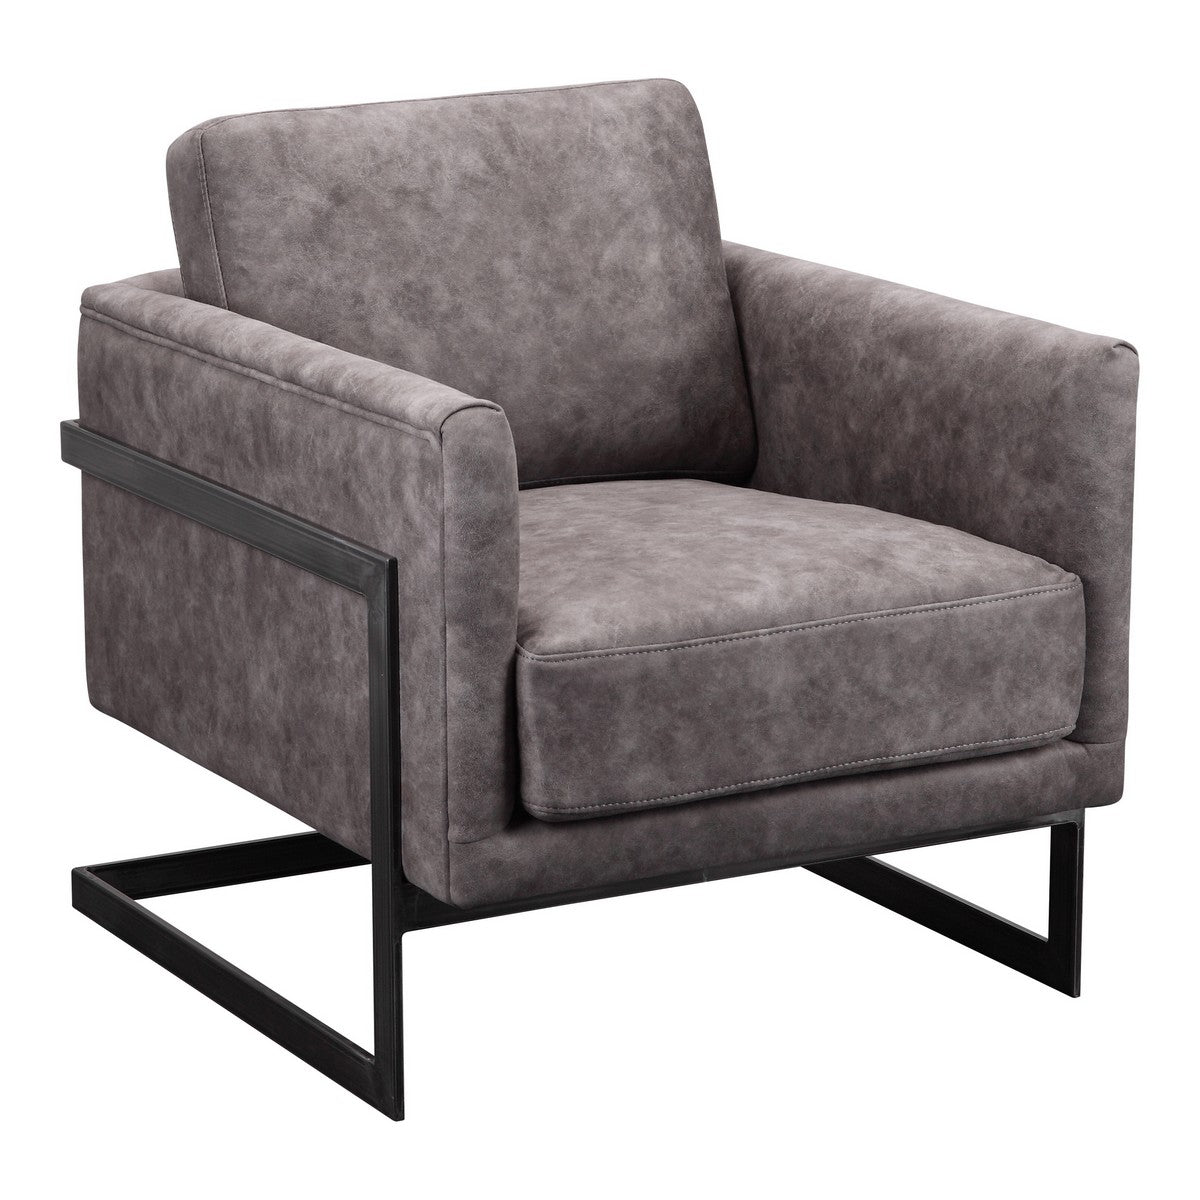 Moe's Home Collection Luxley Club Chair Grey Velvet - PK-1082-15